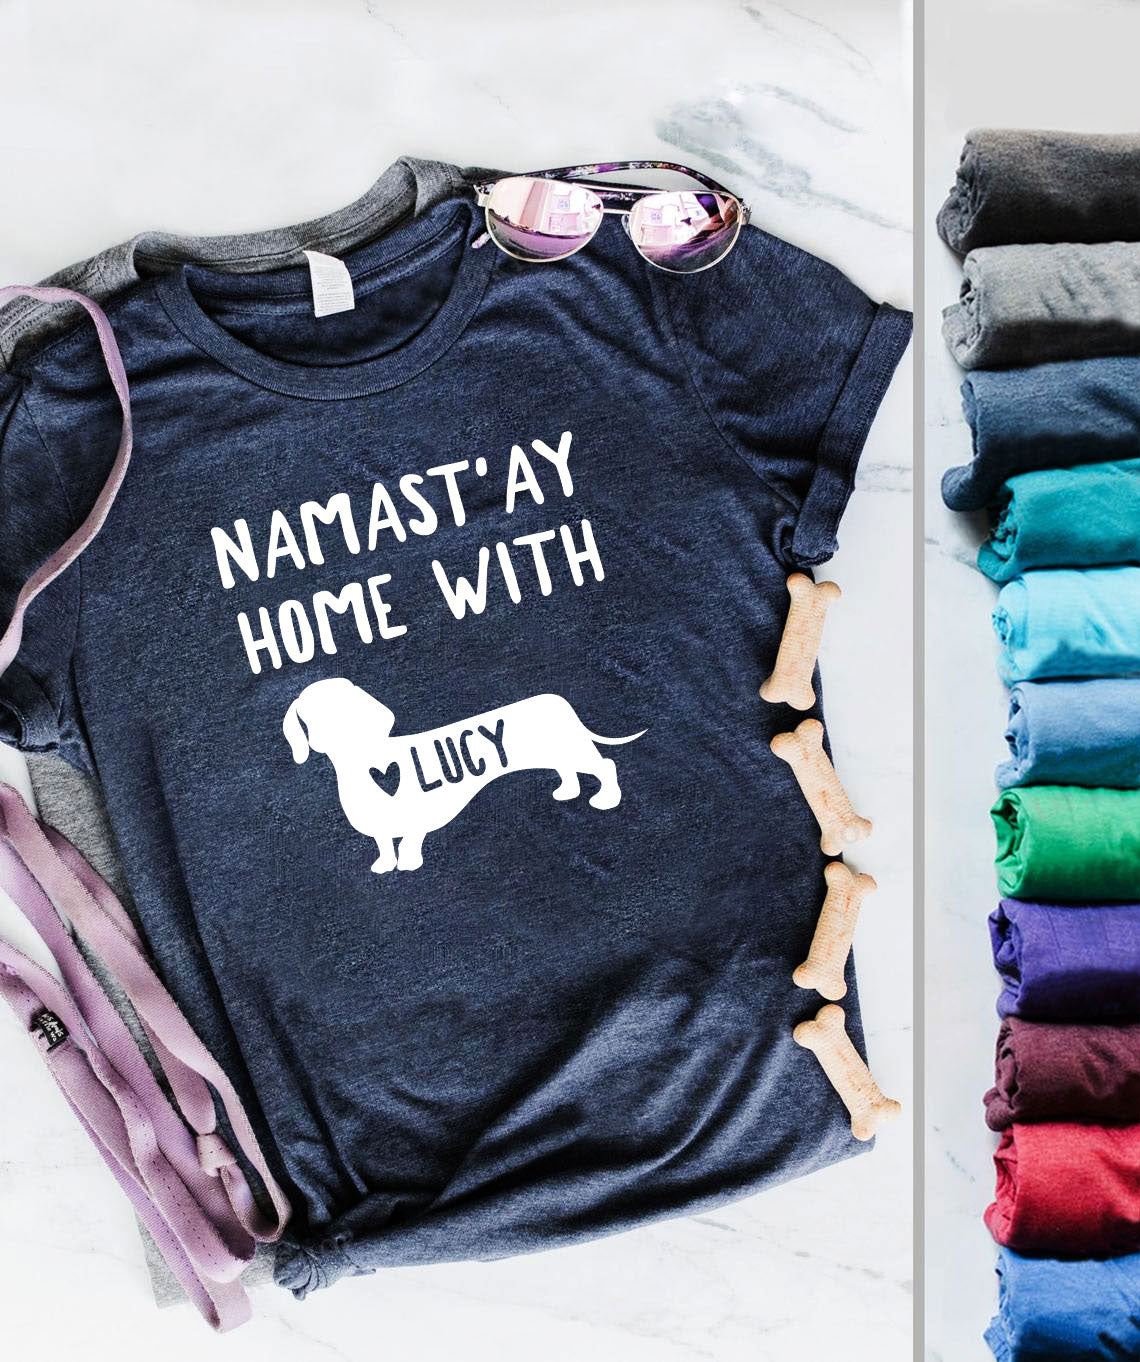 Namastay Home With Personalized Dachshund Shirts